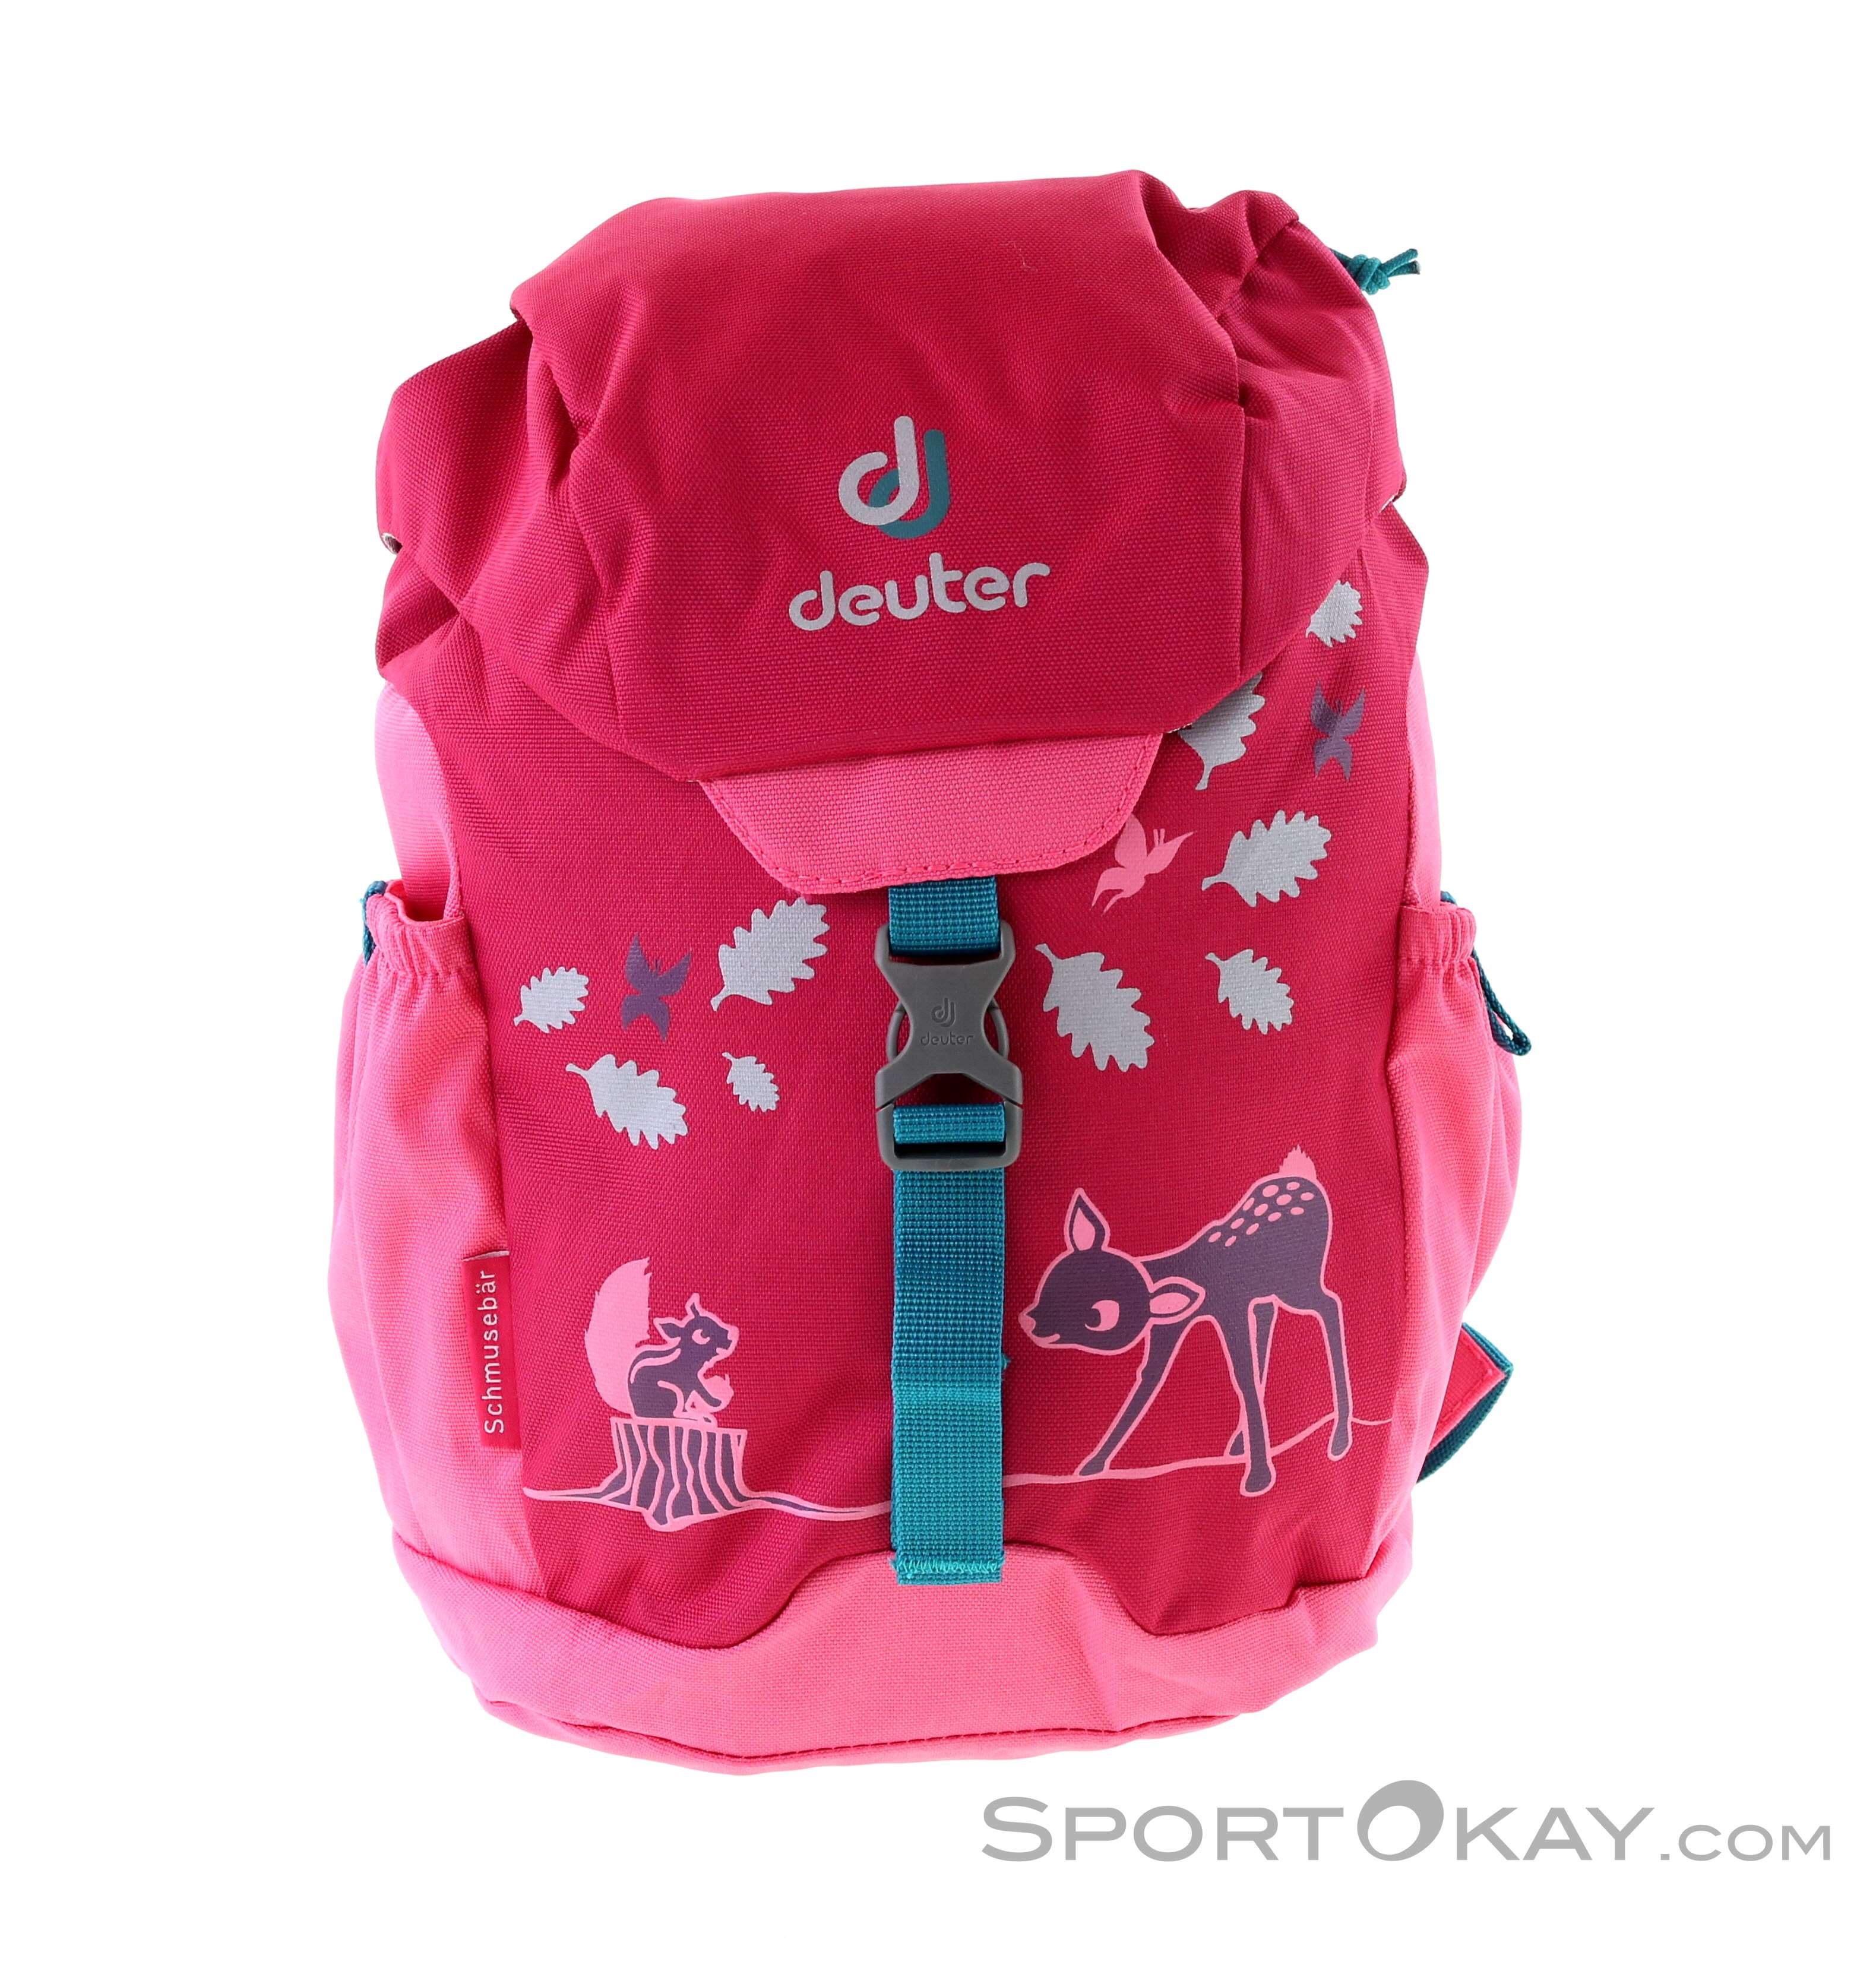 Deuter Schmusebär 8l Kids Backpack - Backpacks - Backpacks Headlamps - Outdoor - All